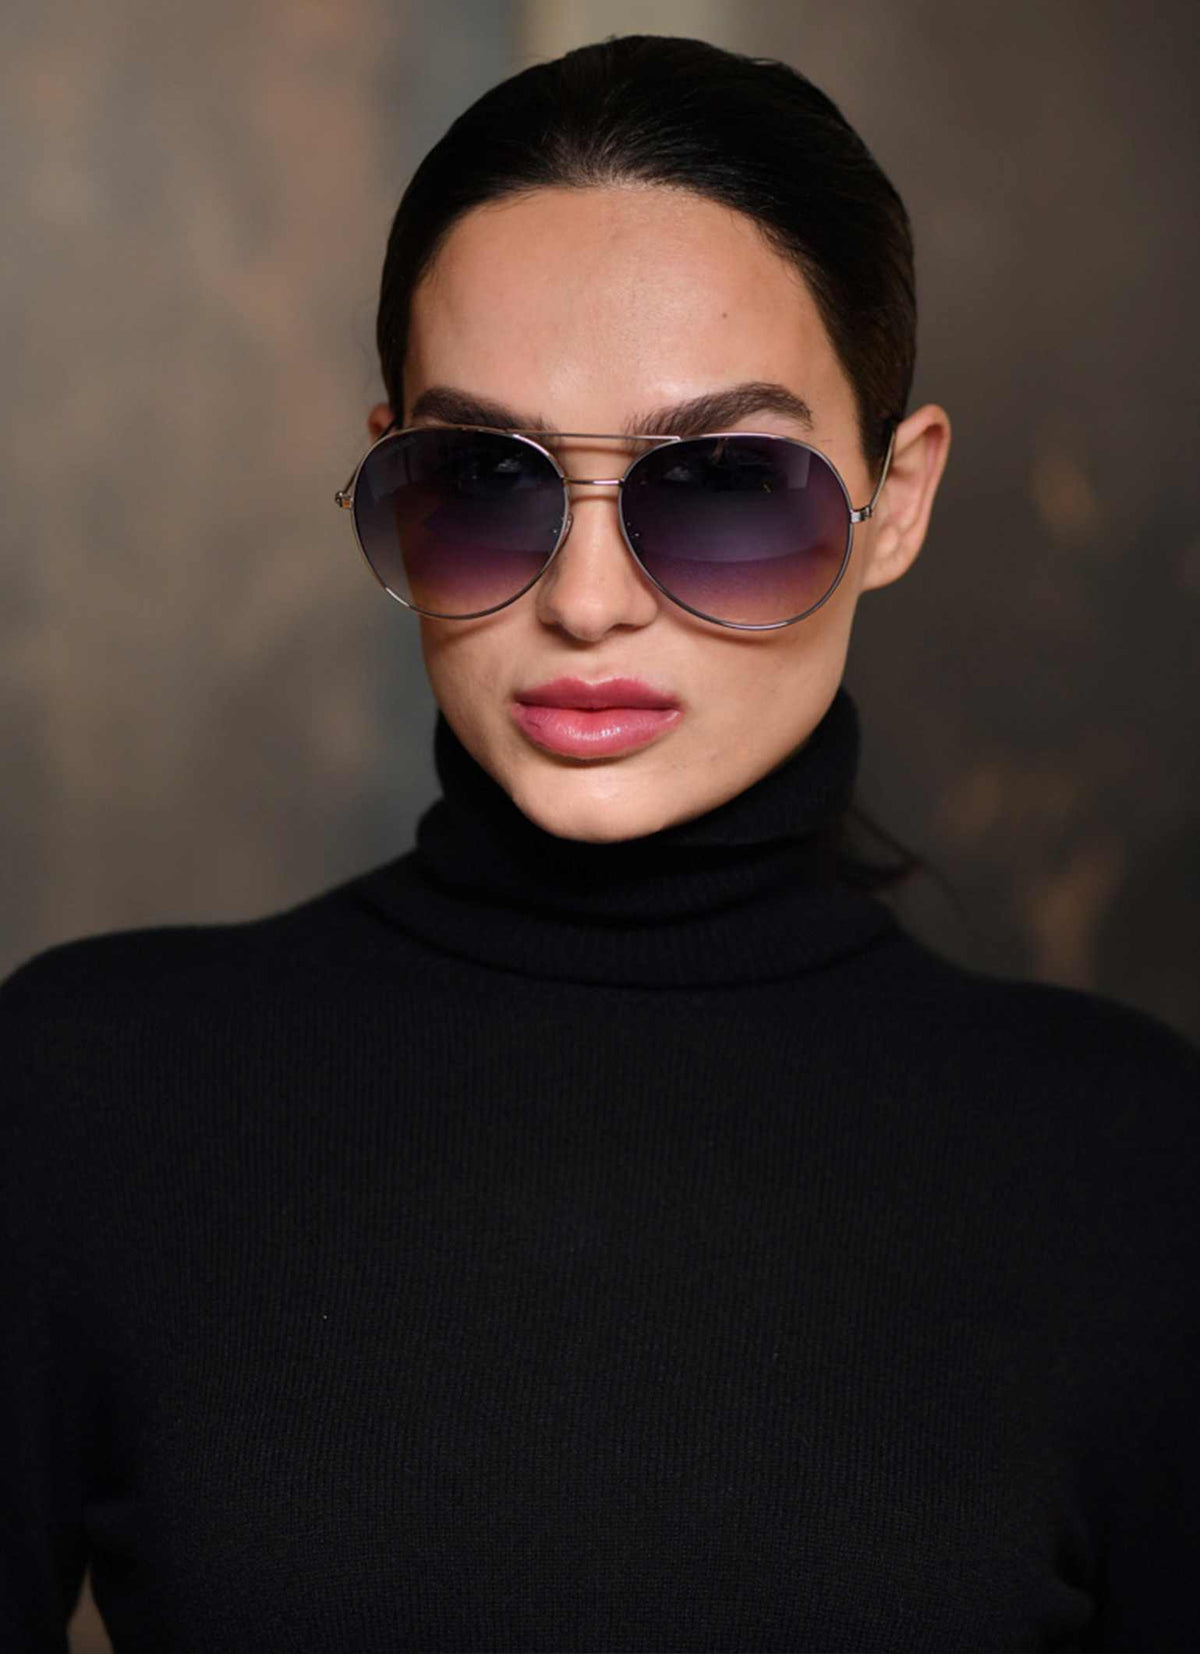 Women sunglasses aviator with cashmere black sweater